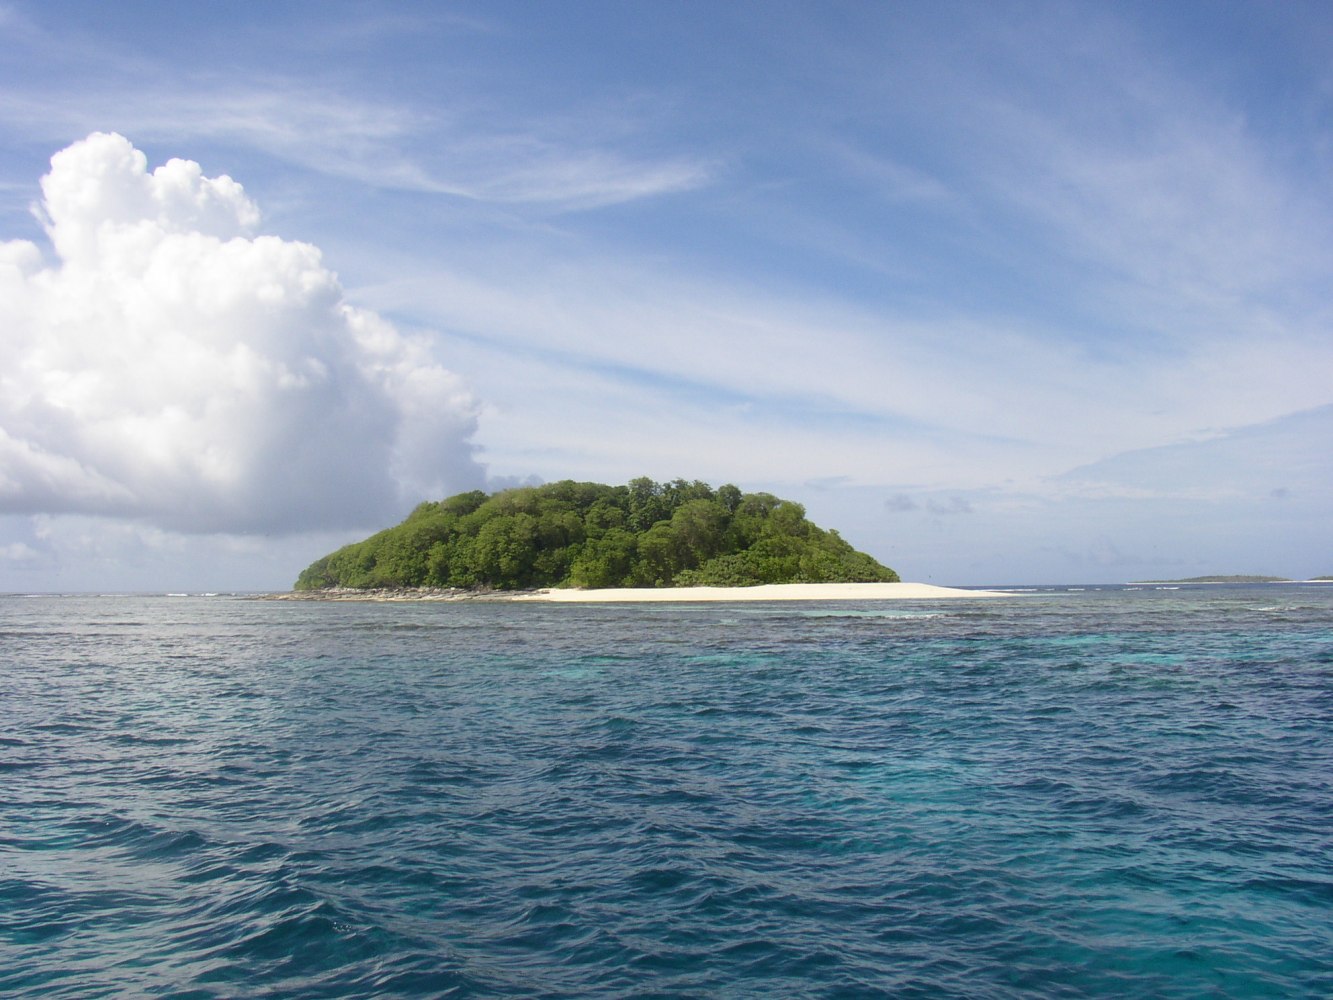 Just island. Остров Tahifehifa. Остров Тахифехифа. Нукупуле остров. Необитаемые острова Тихого океана.